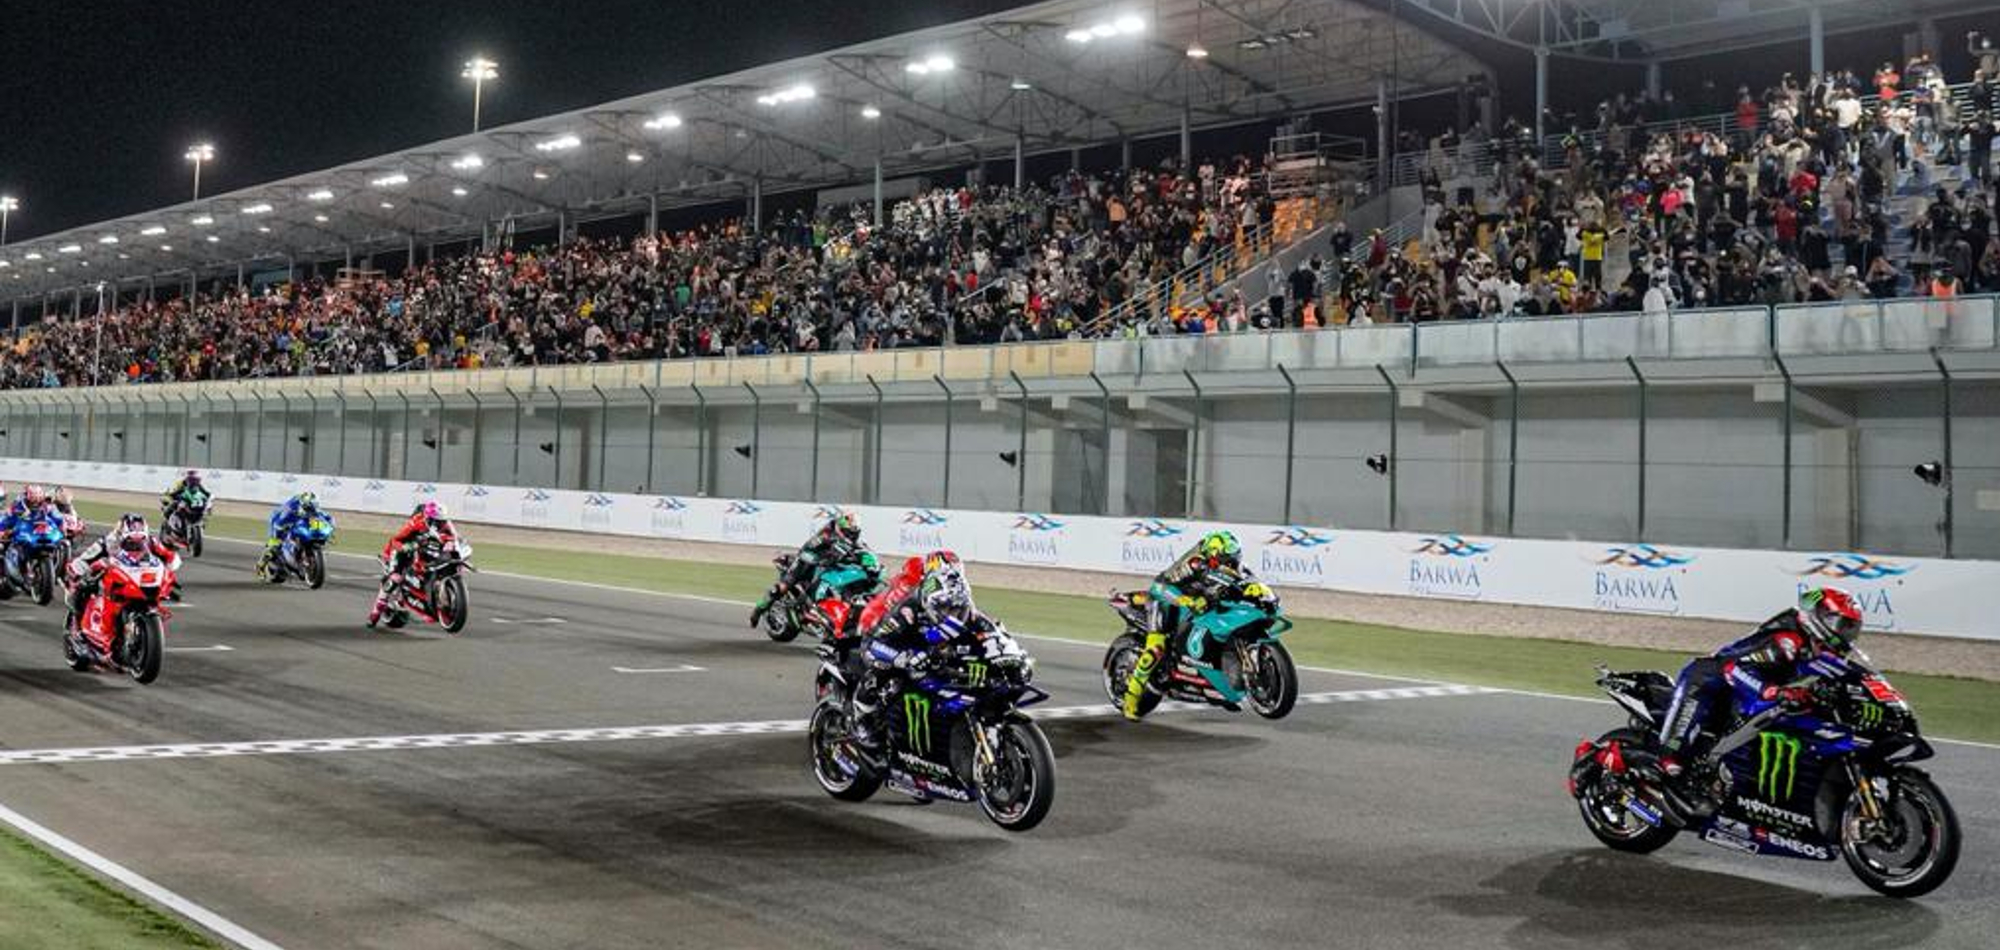 MotoGP: Qatar set to host season opener